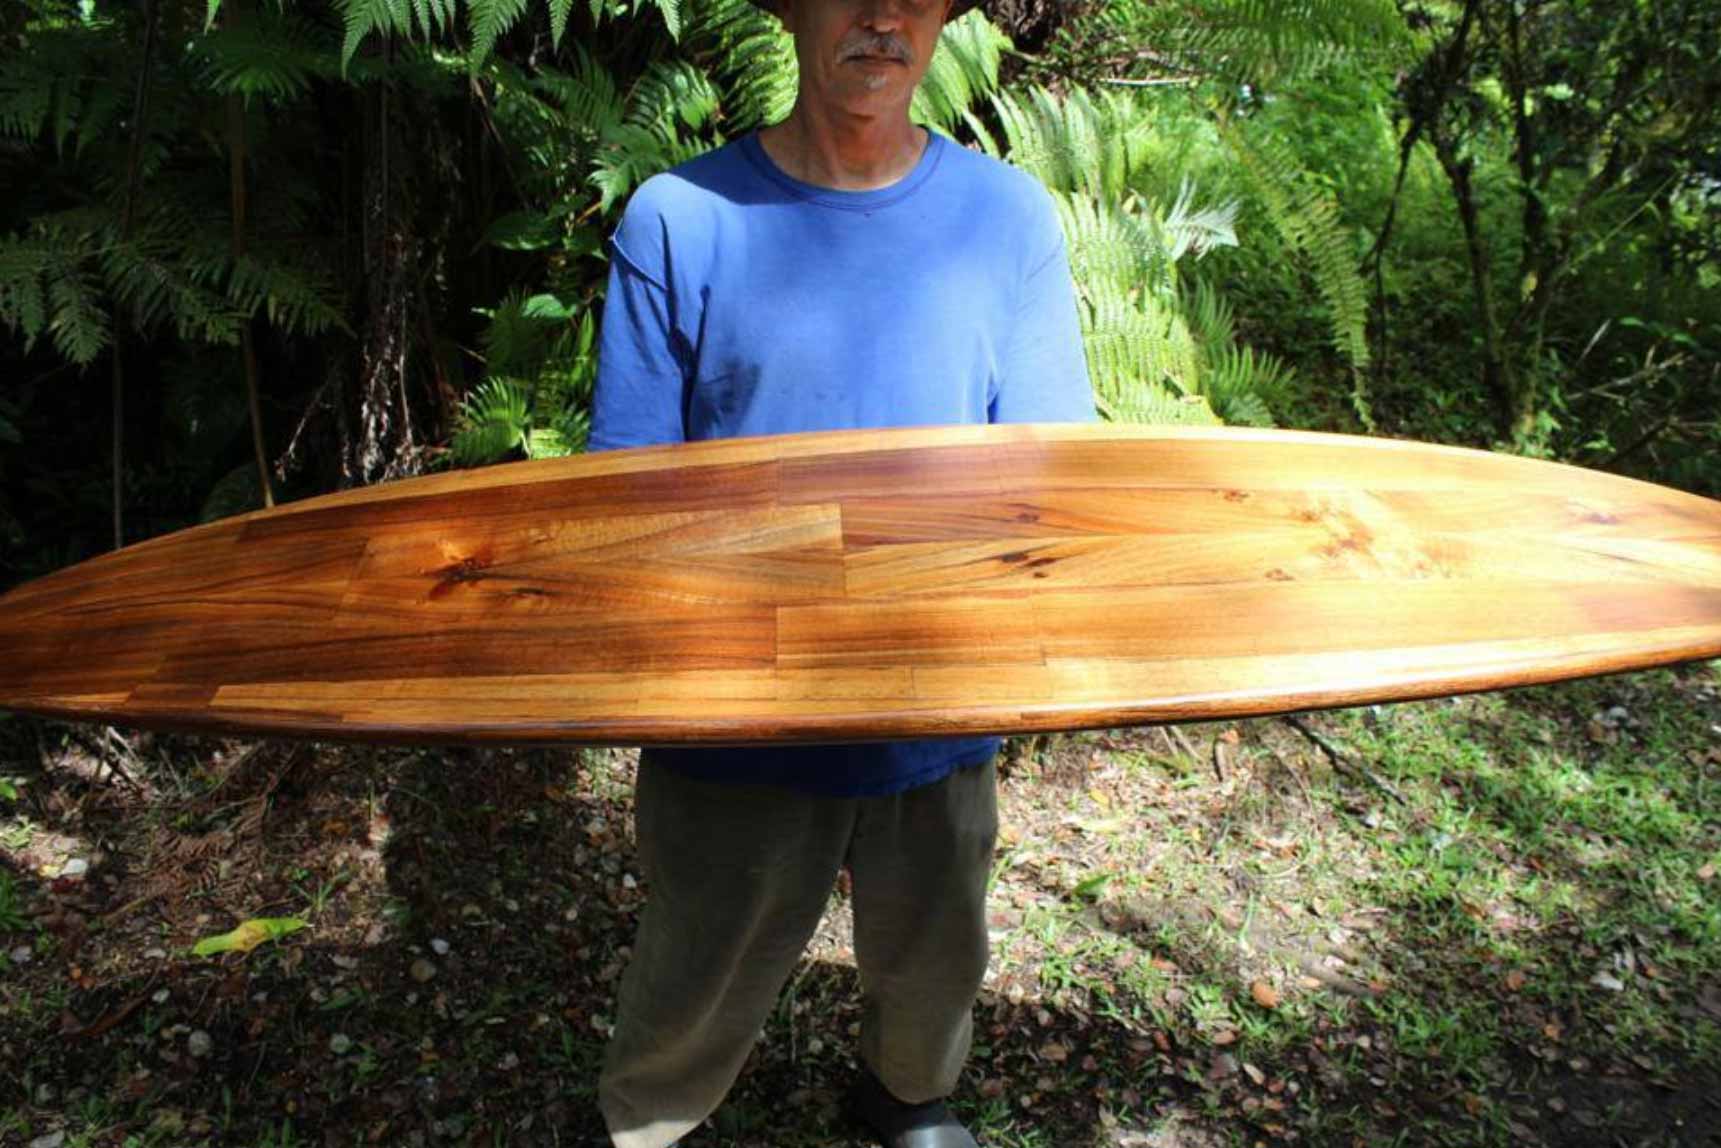 find Hawaiian pictures plus matching koa wood frames